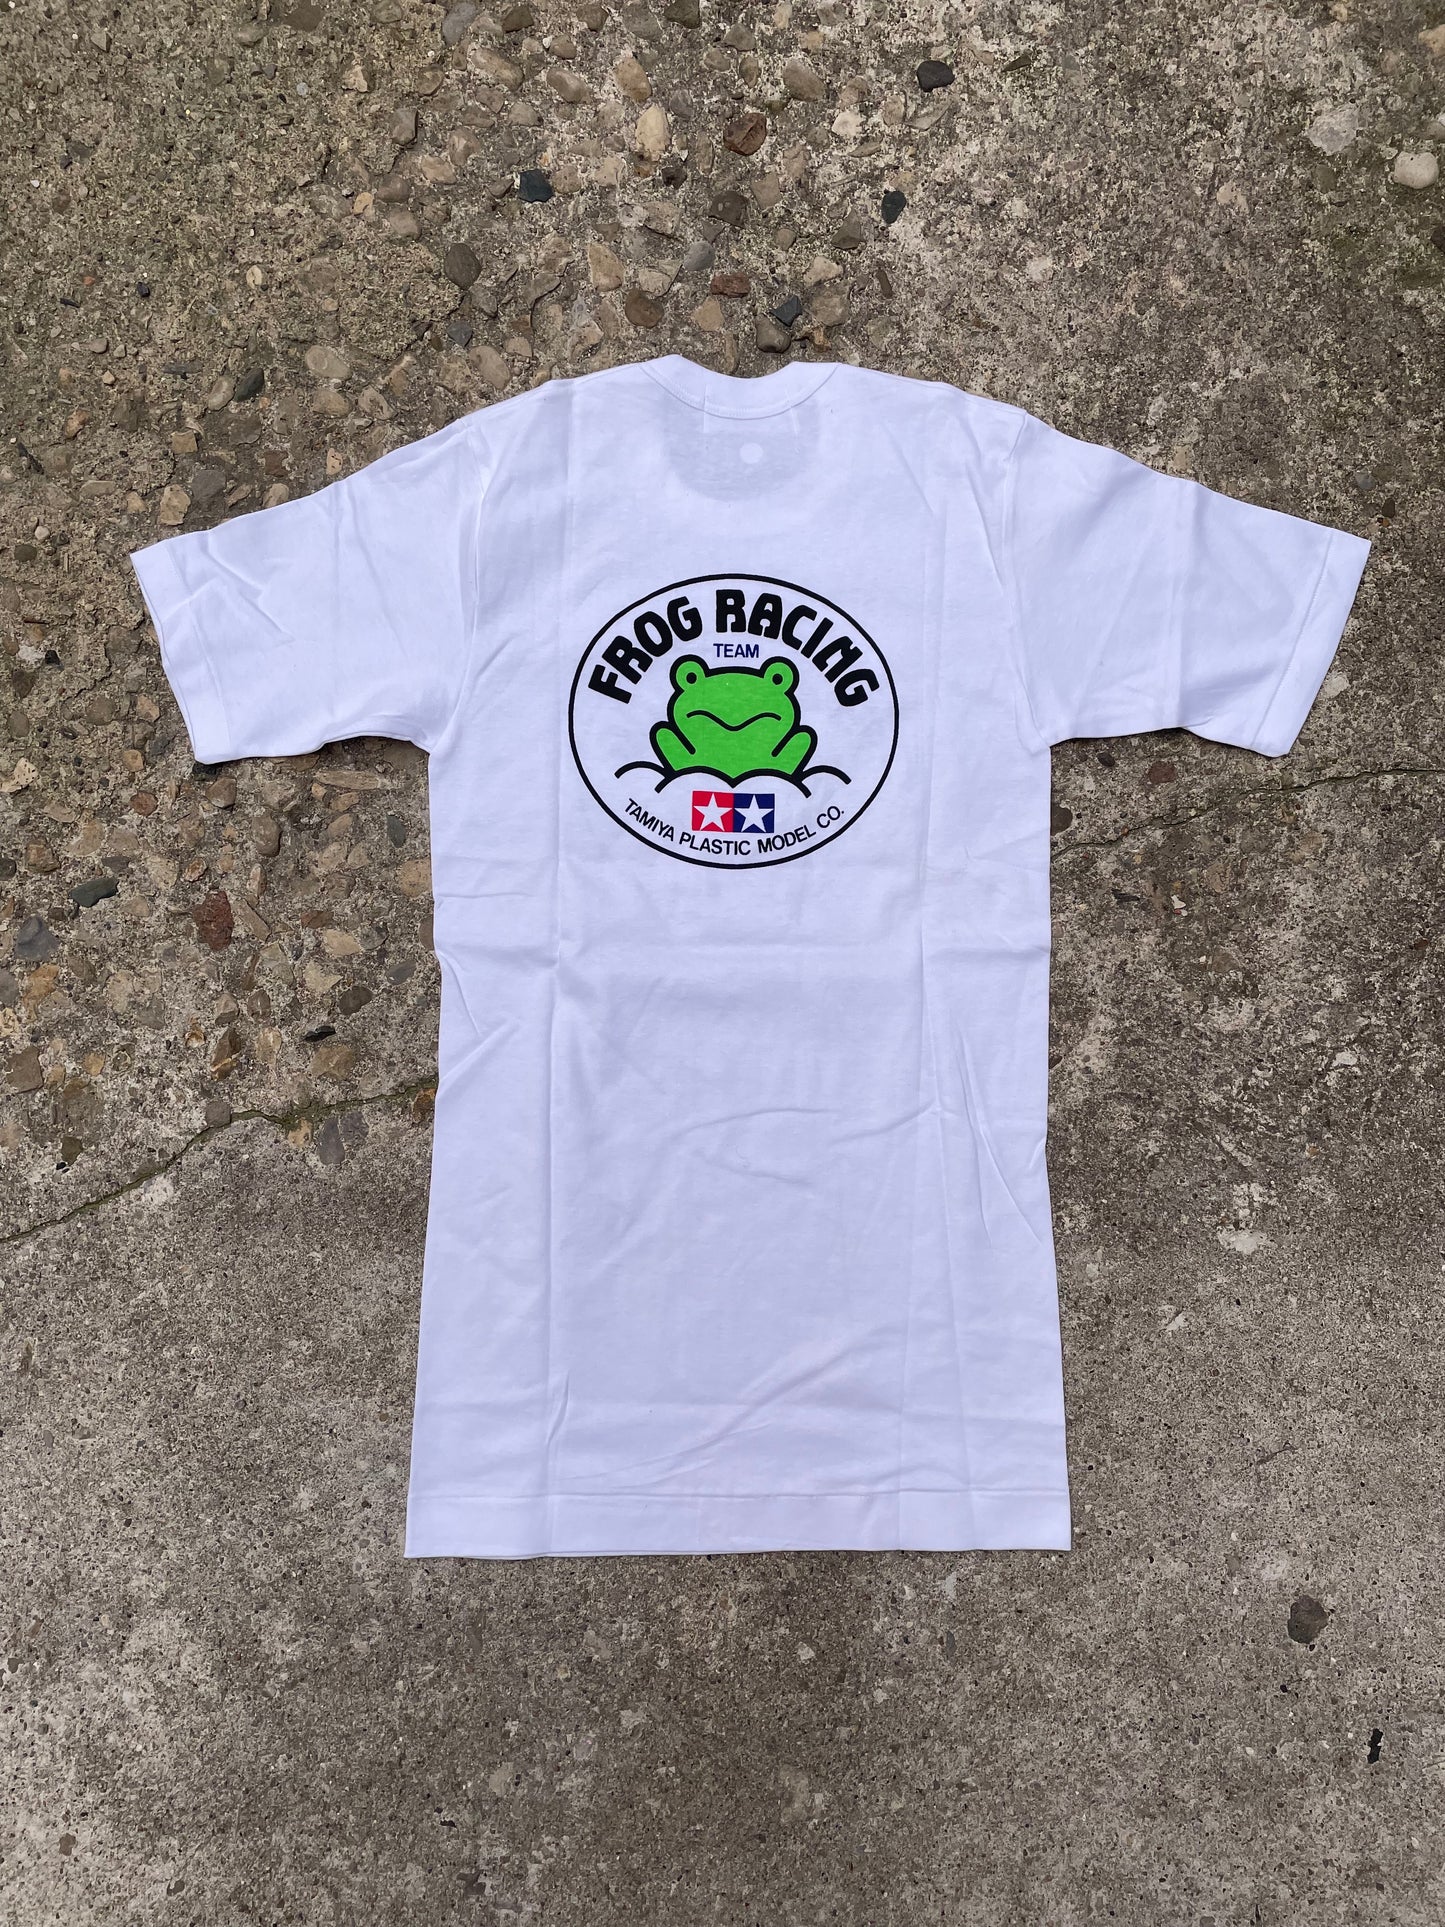 1980's/1990's Tamiya Plastic Models Frog Racing Team T-Shirt - S